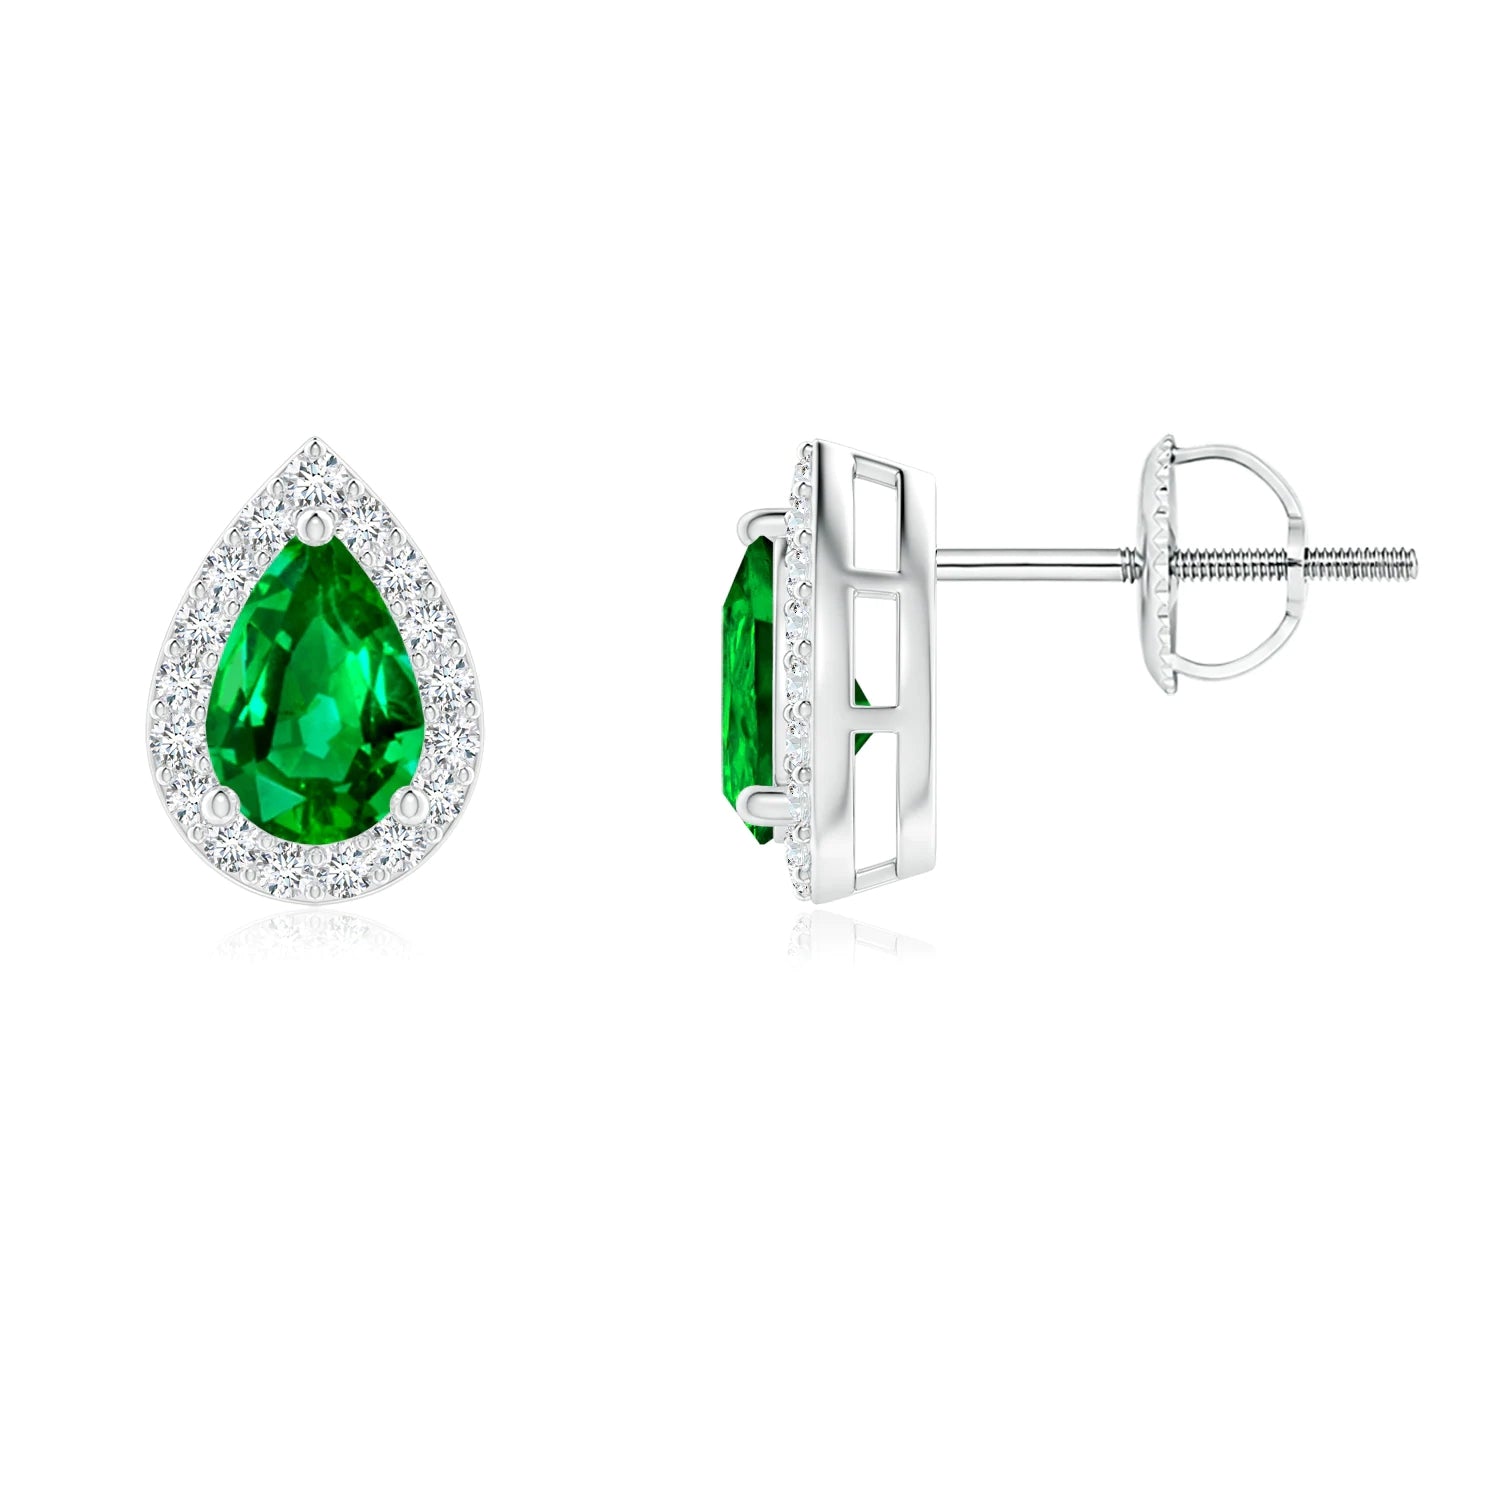 1.17 CT. Pear-Shaped Emerald Halo Stud Earrings